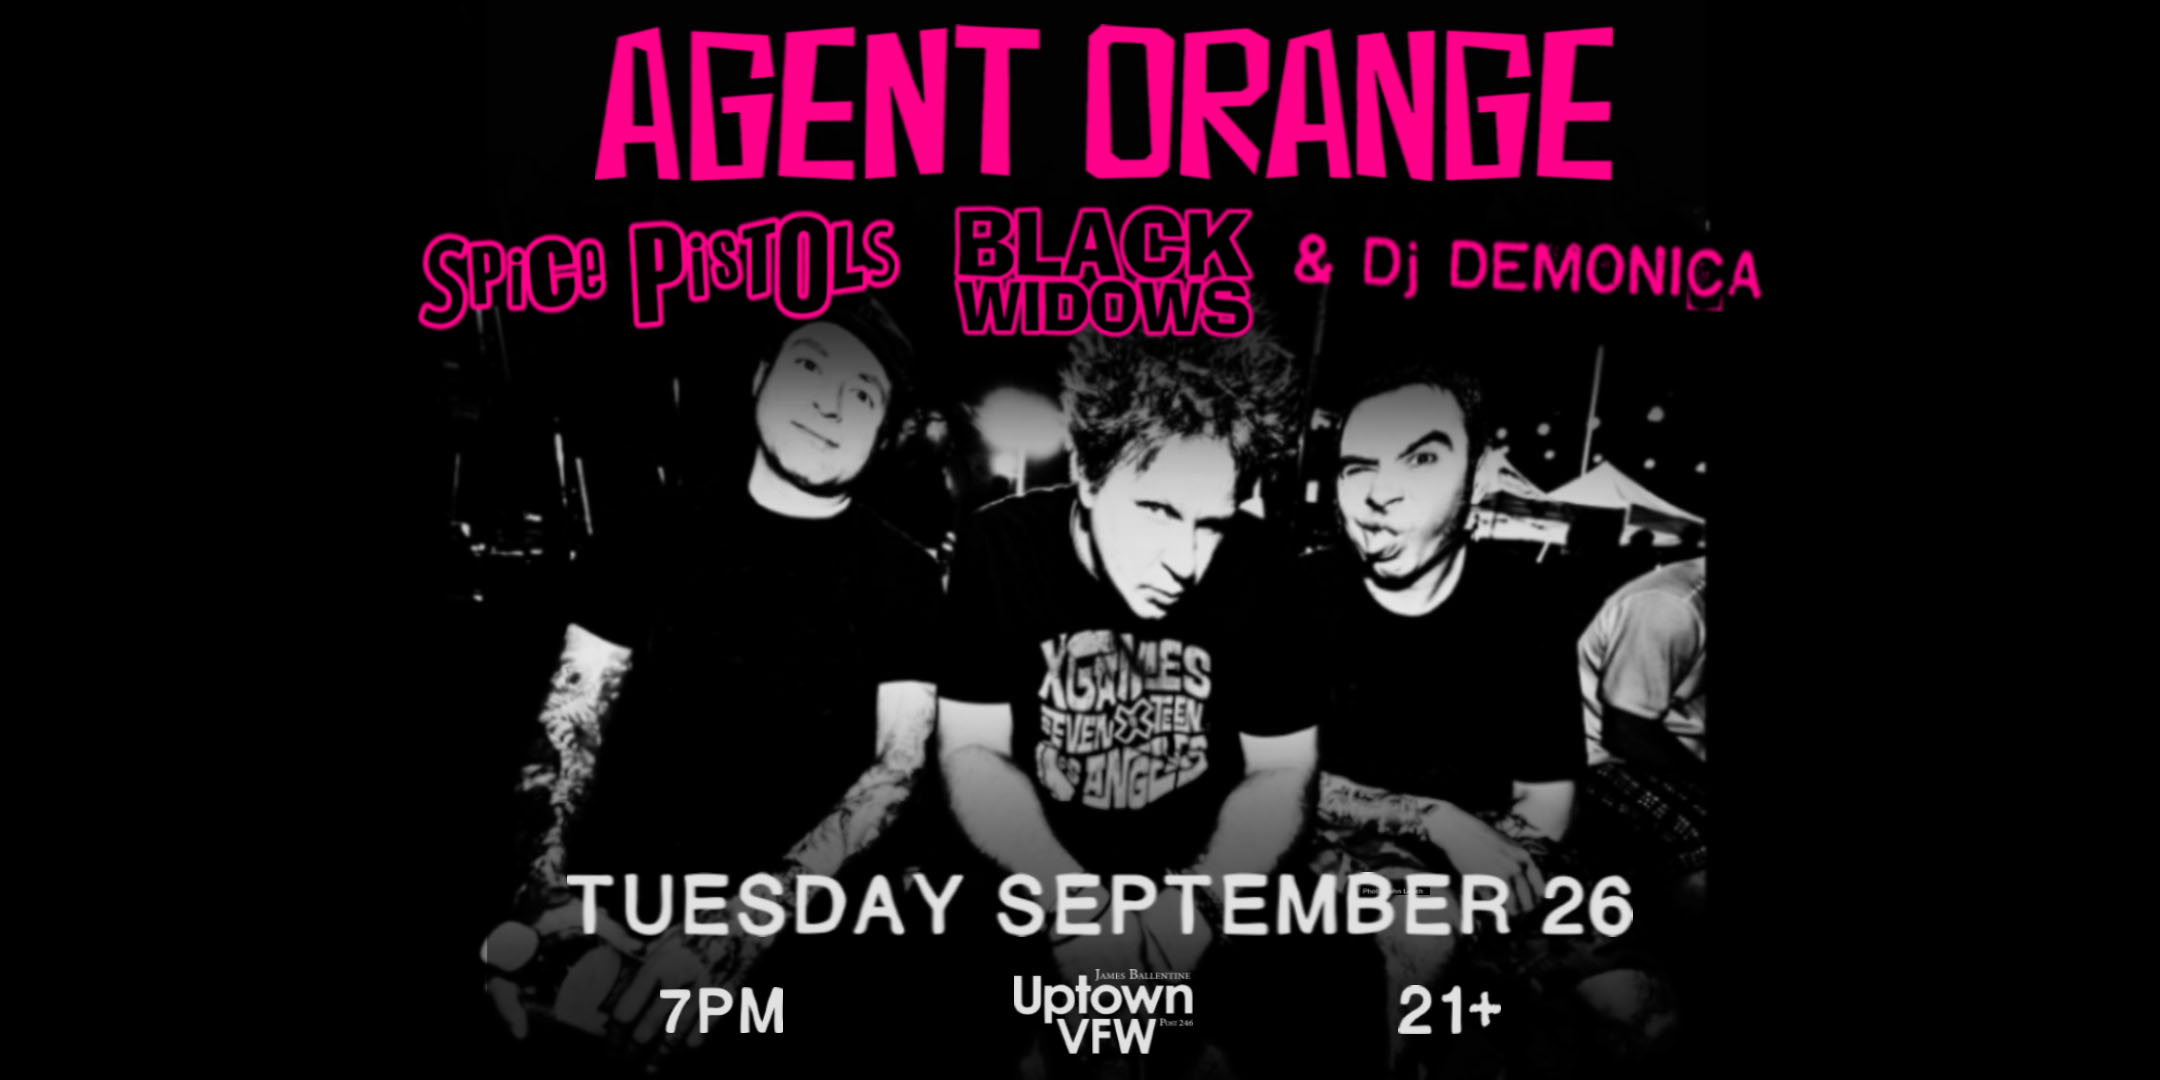 Agent Orange Spice Pistols Black Widows Dj Demonica Tuesday, September 26 James Ballentine "Uptown" VFW Post 246 Doors 7:00pm :: Music 7:00pm :: 21+ GA $20 ADV / $25 DOS NO REFUNDS